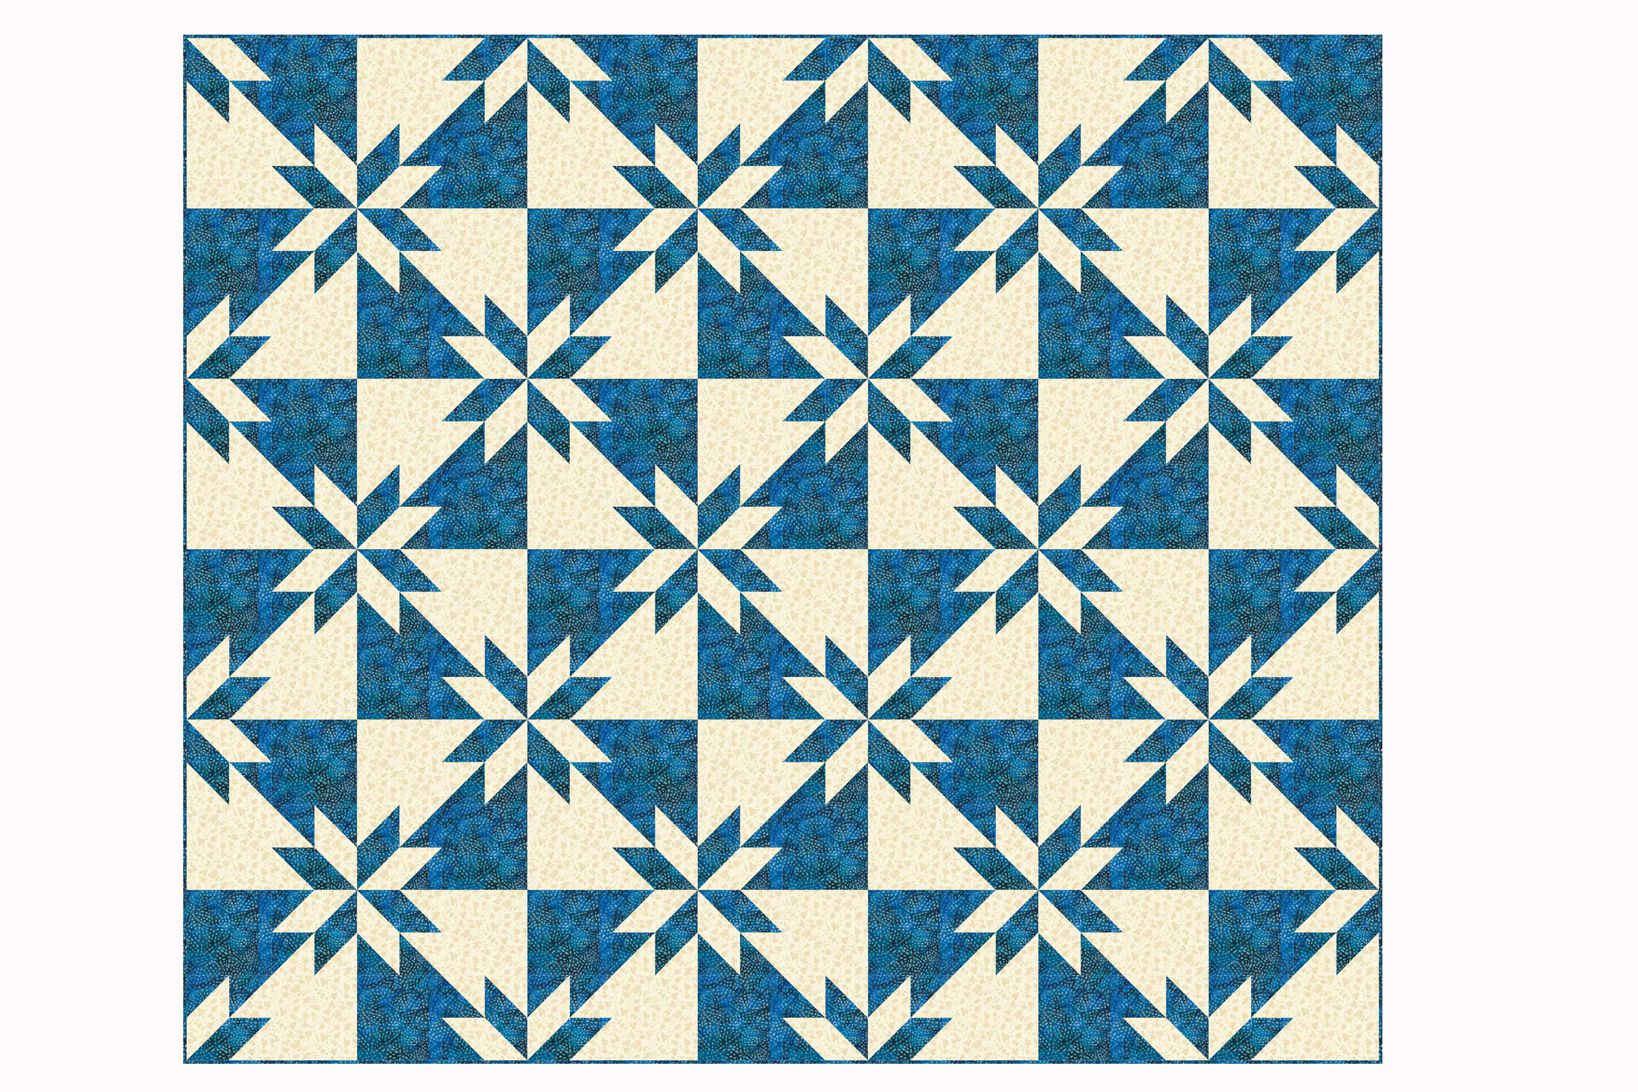 easy-hunter-s-star-quilt-pattern